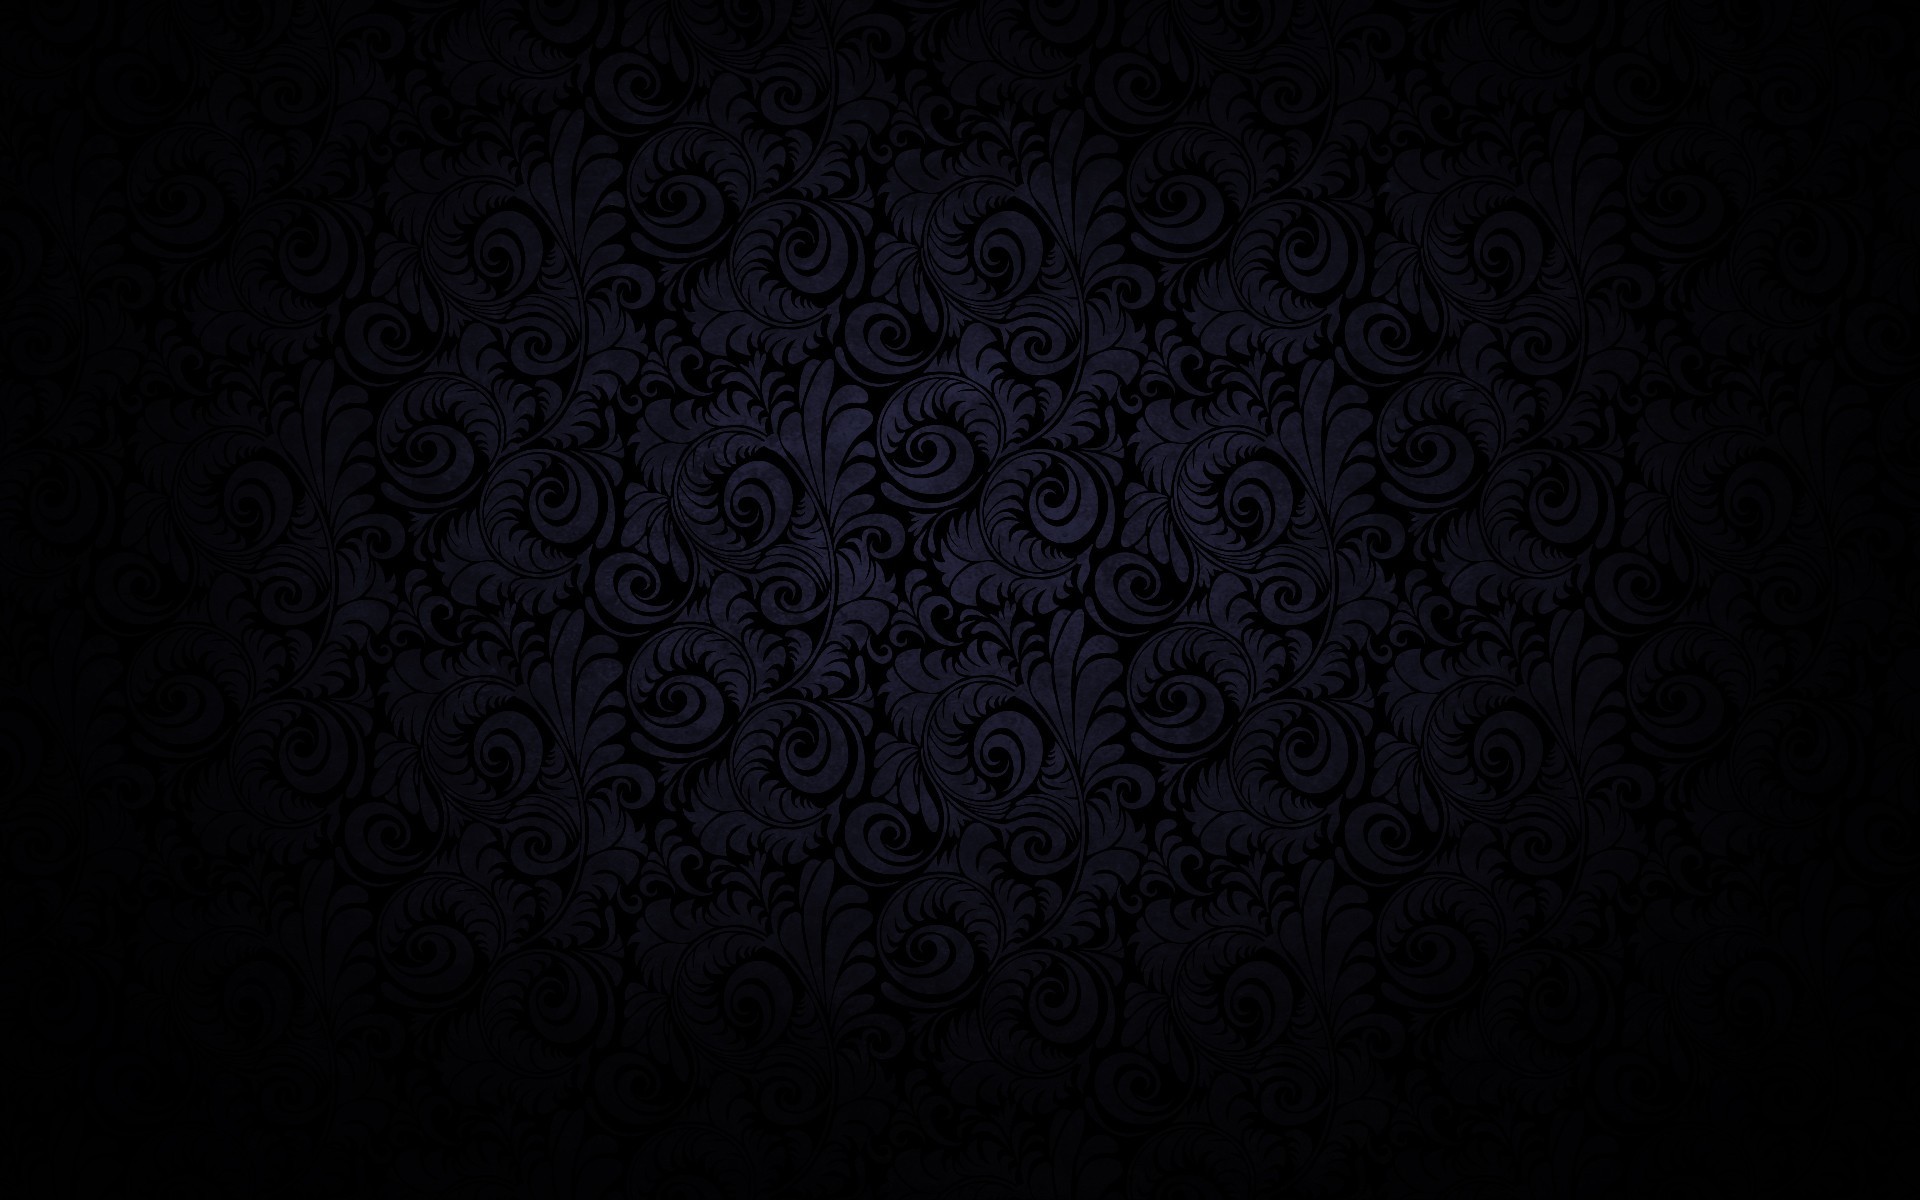 1920x1200 Cool Black And White Wallpapers - WallpaperSafari ...